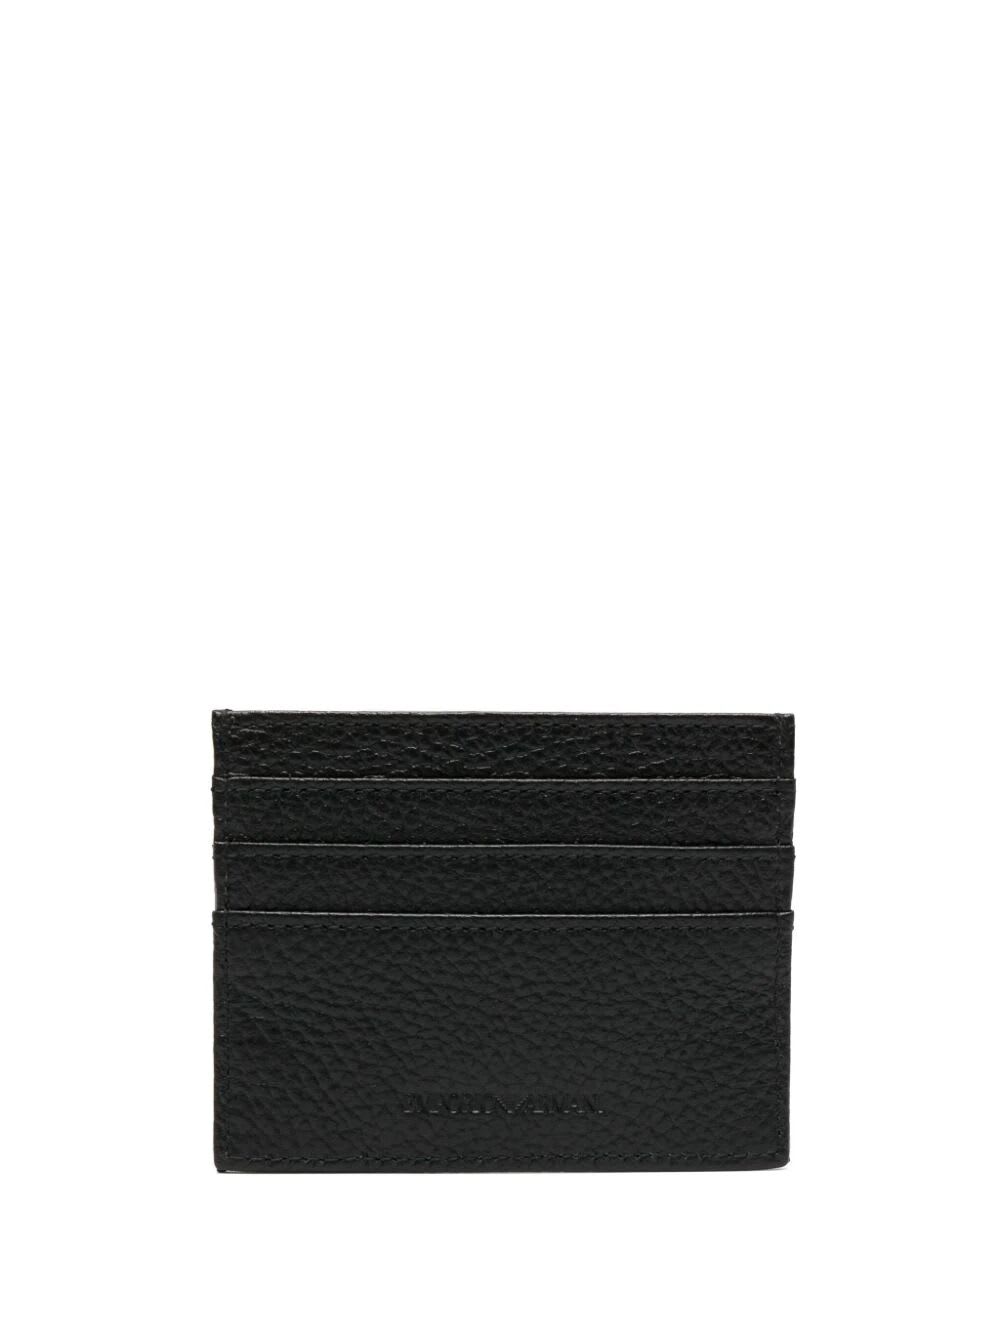 Shop Emporio Armani Credit Card Holder In Lt Grey Black